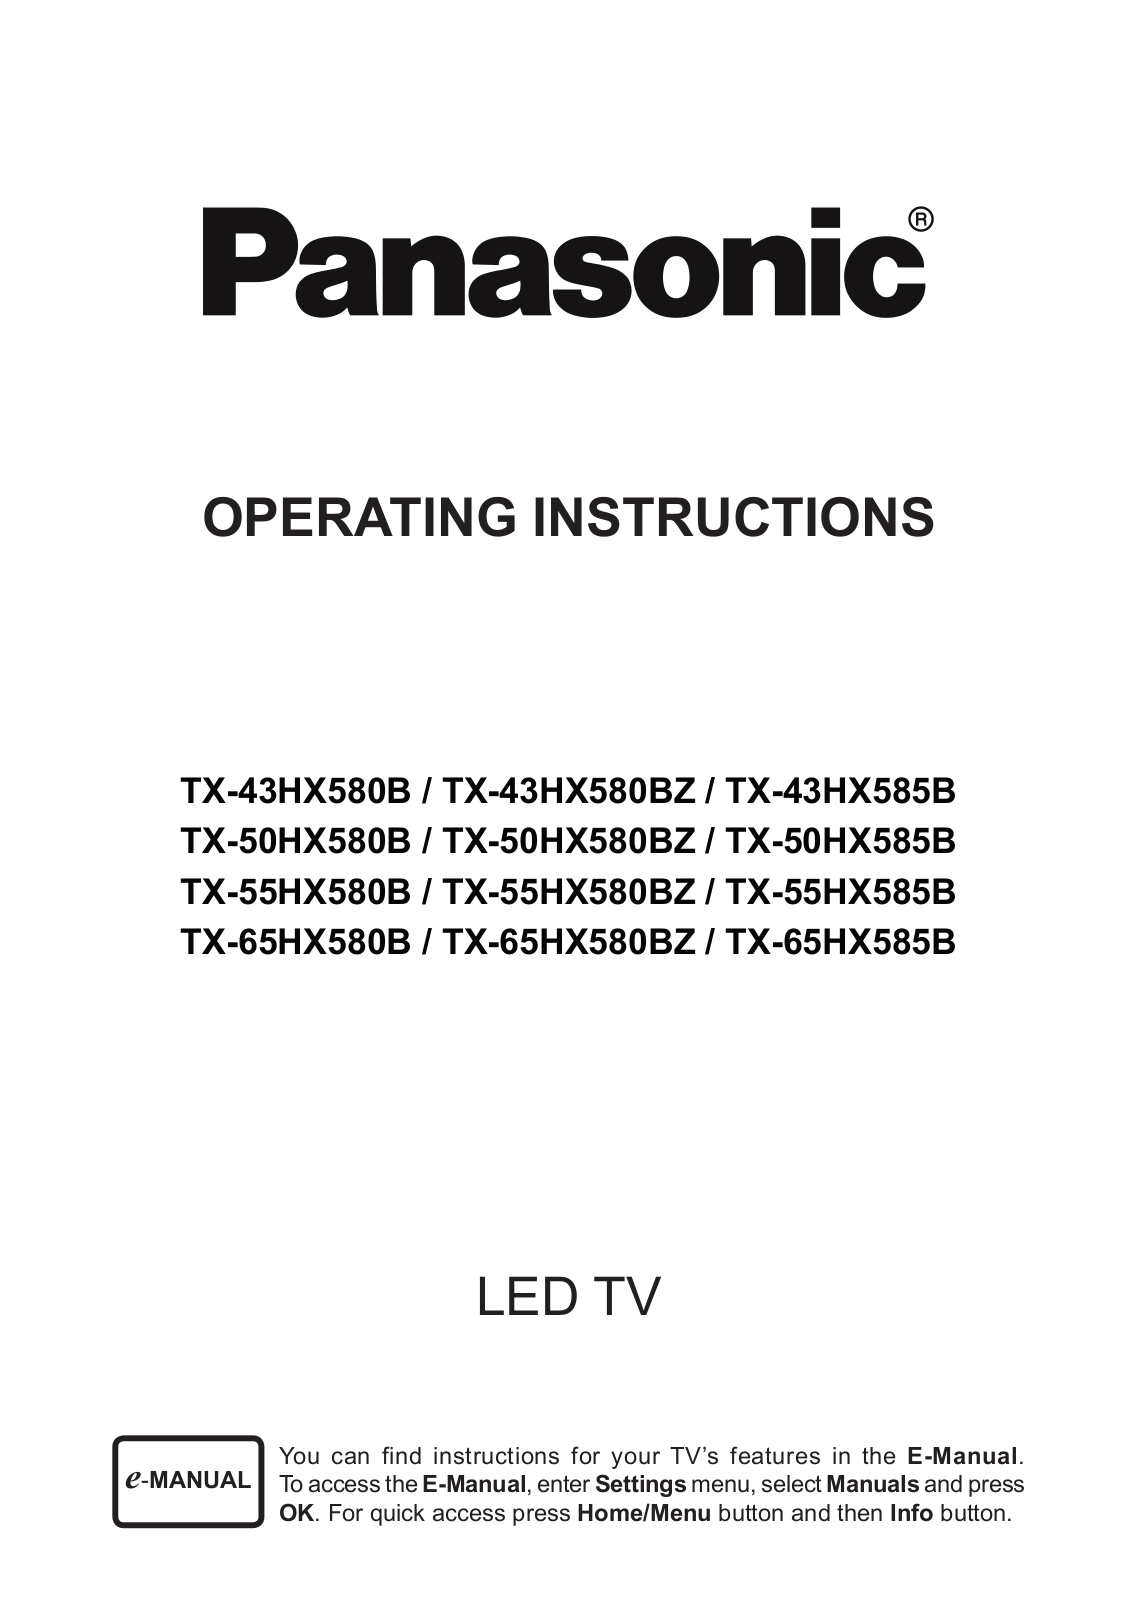 Panasonic TX-65HX580B User Manual